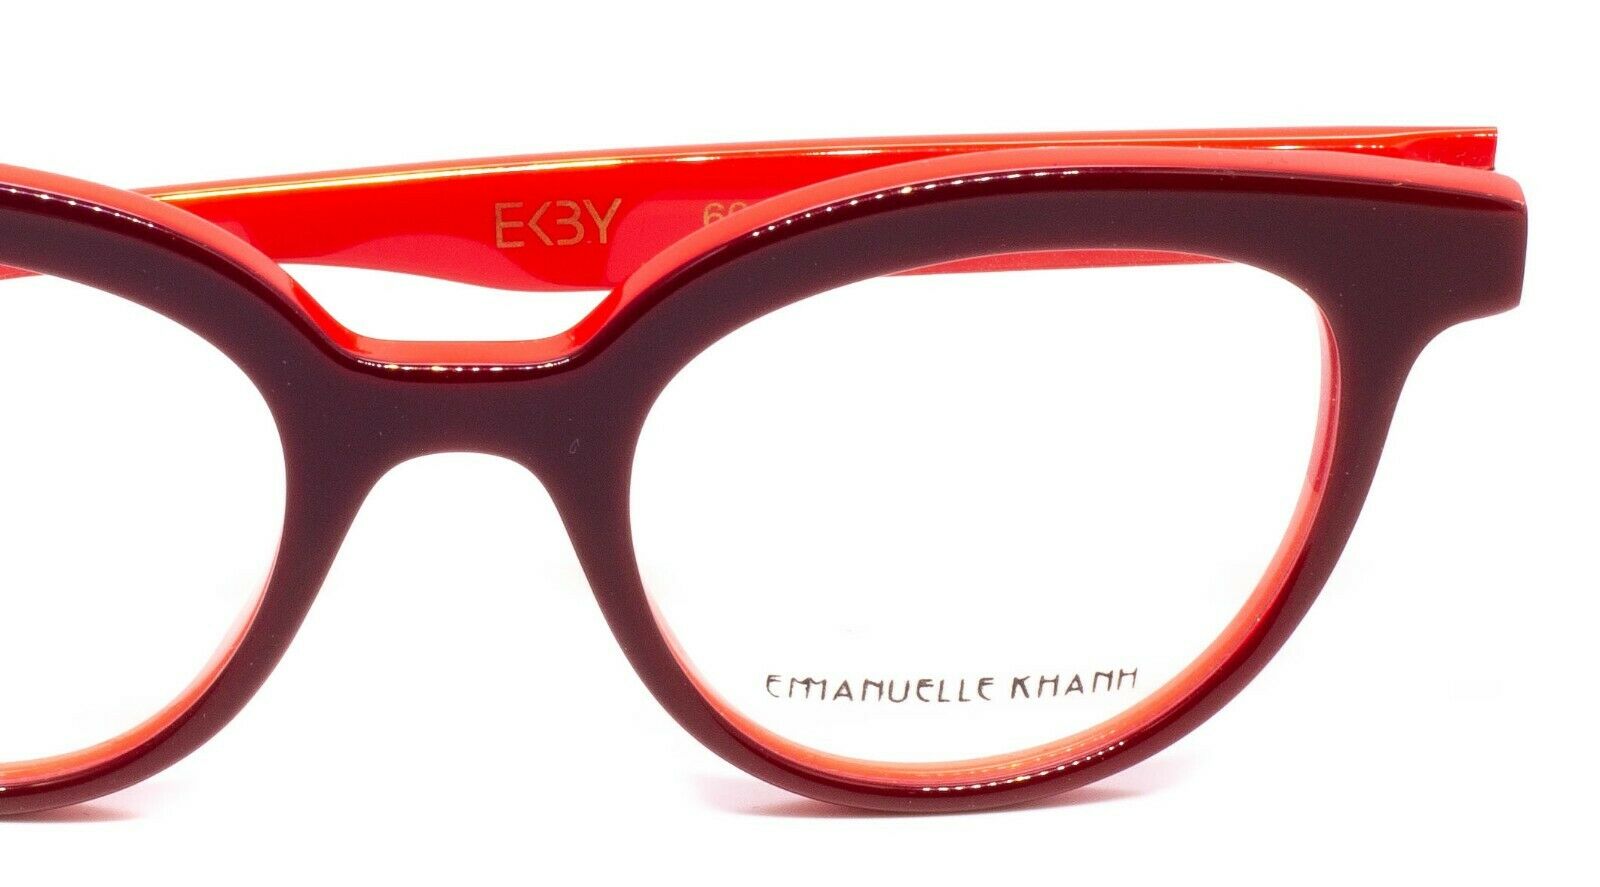 EMMANUELLE KHANH EK3Y 6067/551 Eyewear FRAMES RX Optical Eyeglasses Glasses New